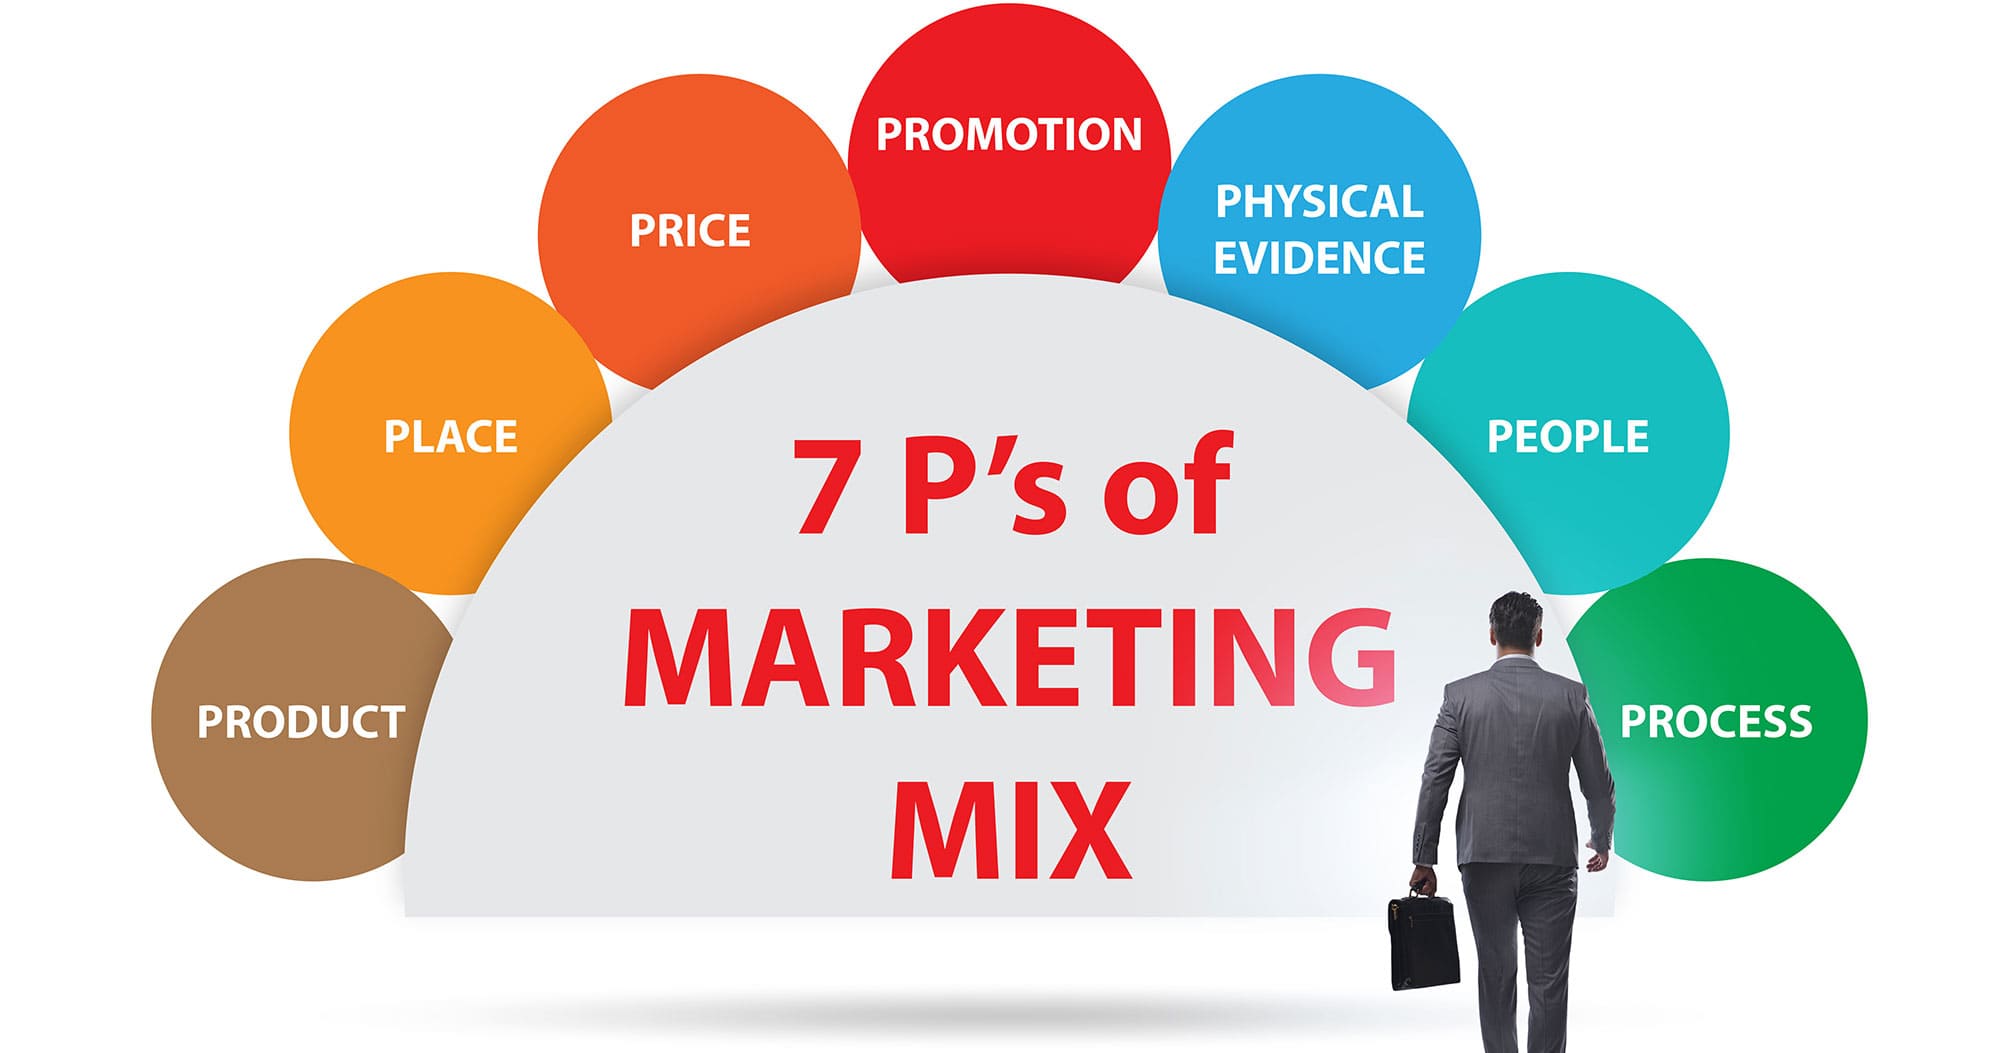 marketing mix 7p